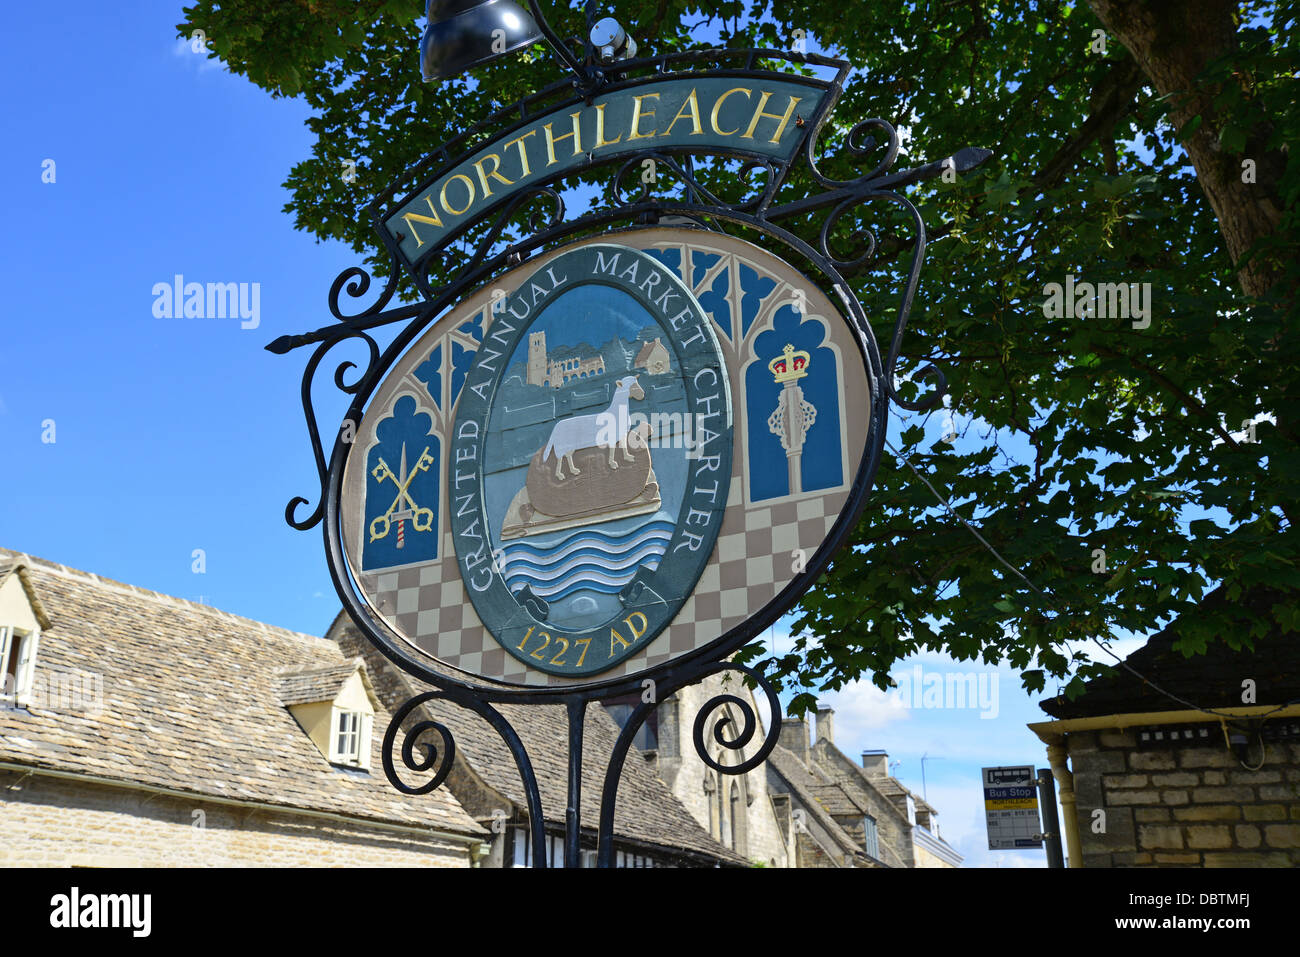 Northleach signe ville, Place du marché, Northleach, Cotswolds, Gloucestershire, Angleterre, Royaume-Uni Banque D'Images